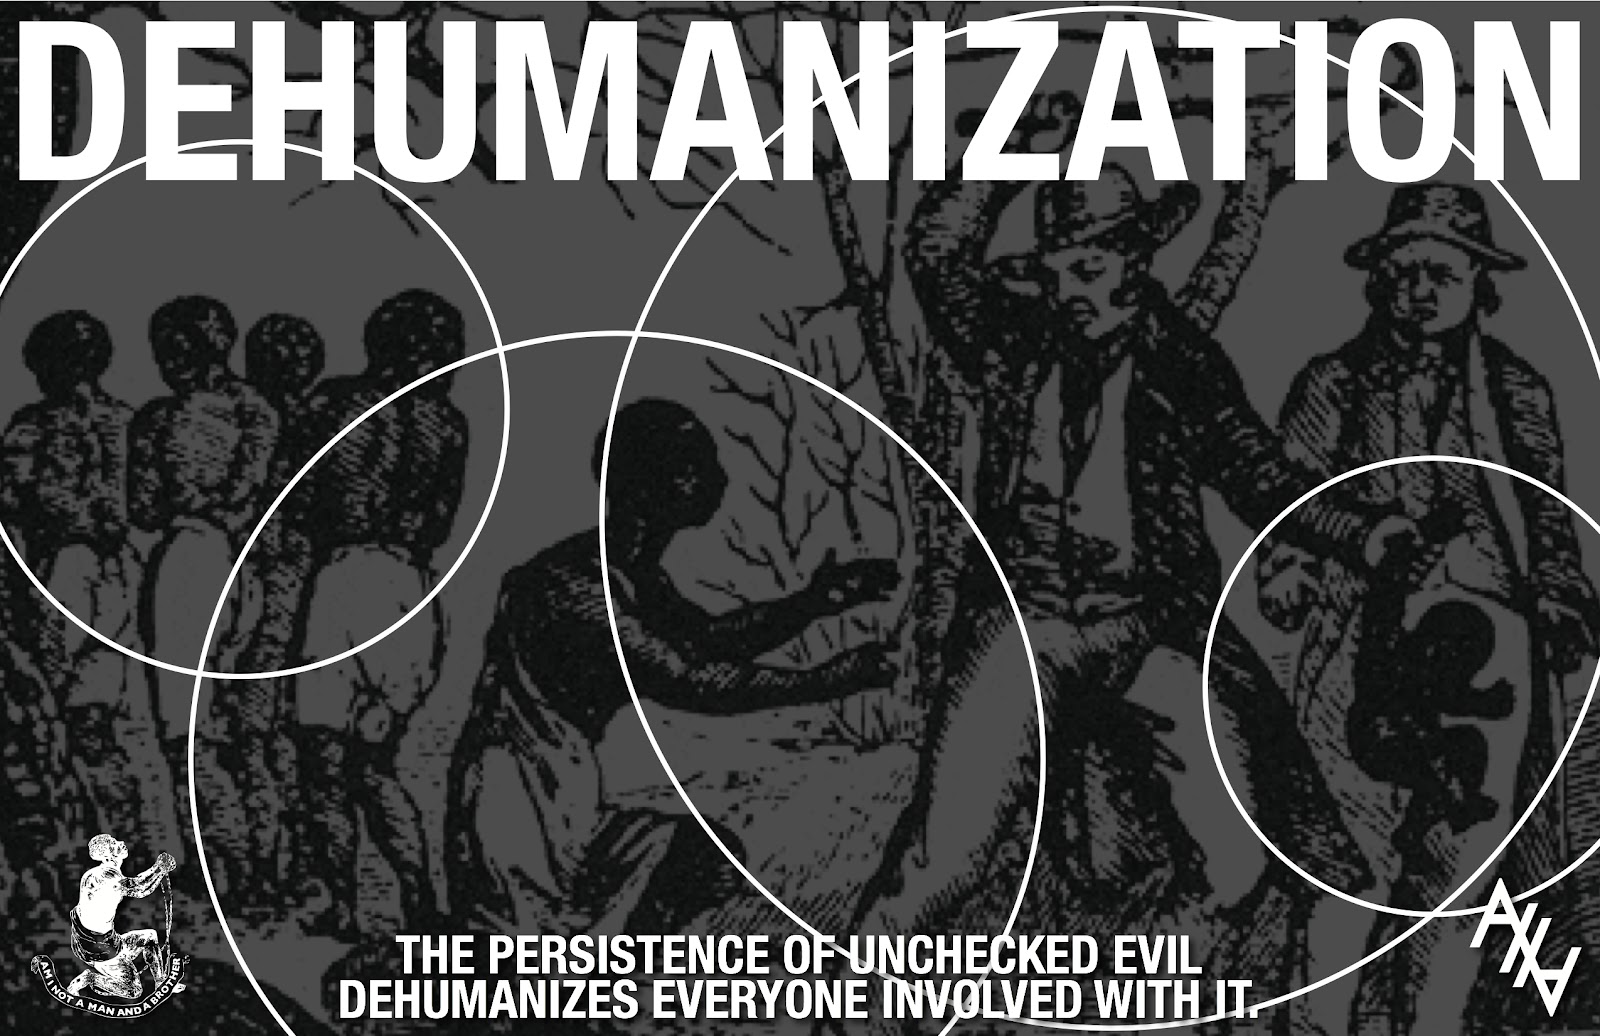 Dehumanization essay conclusion format